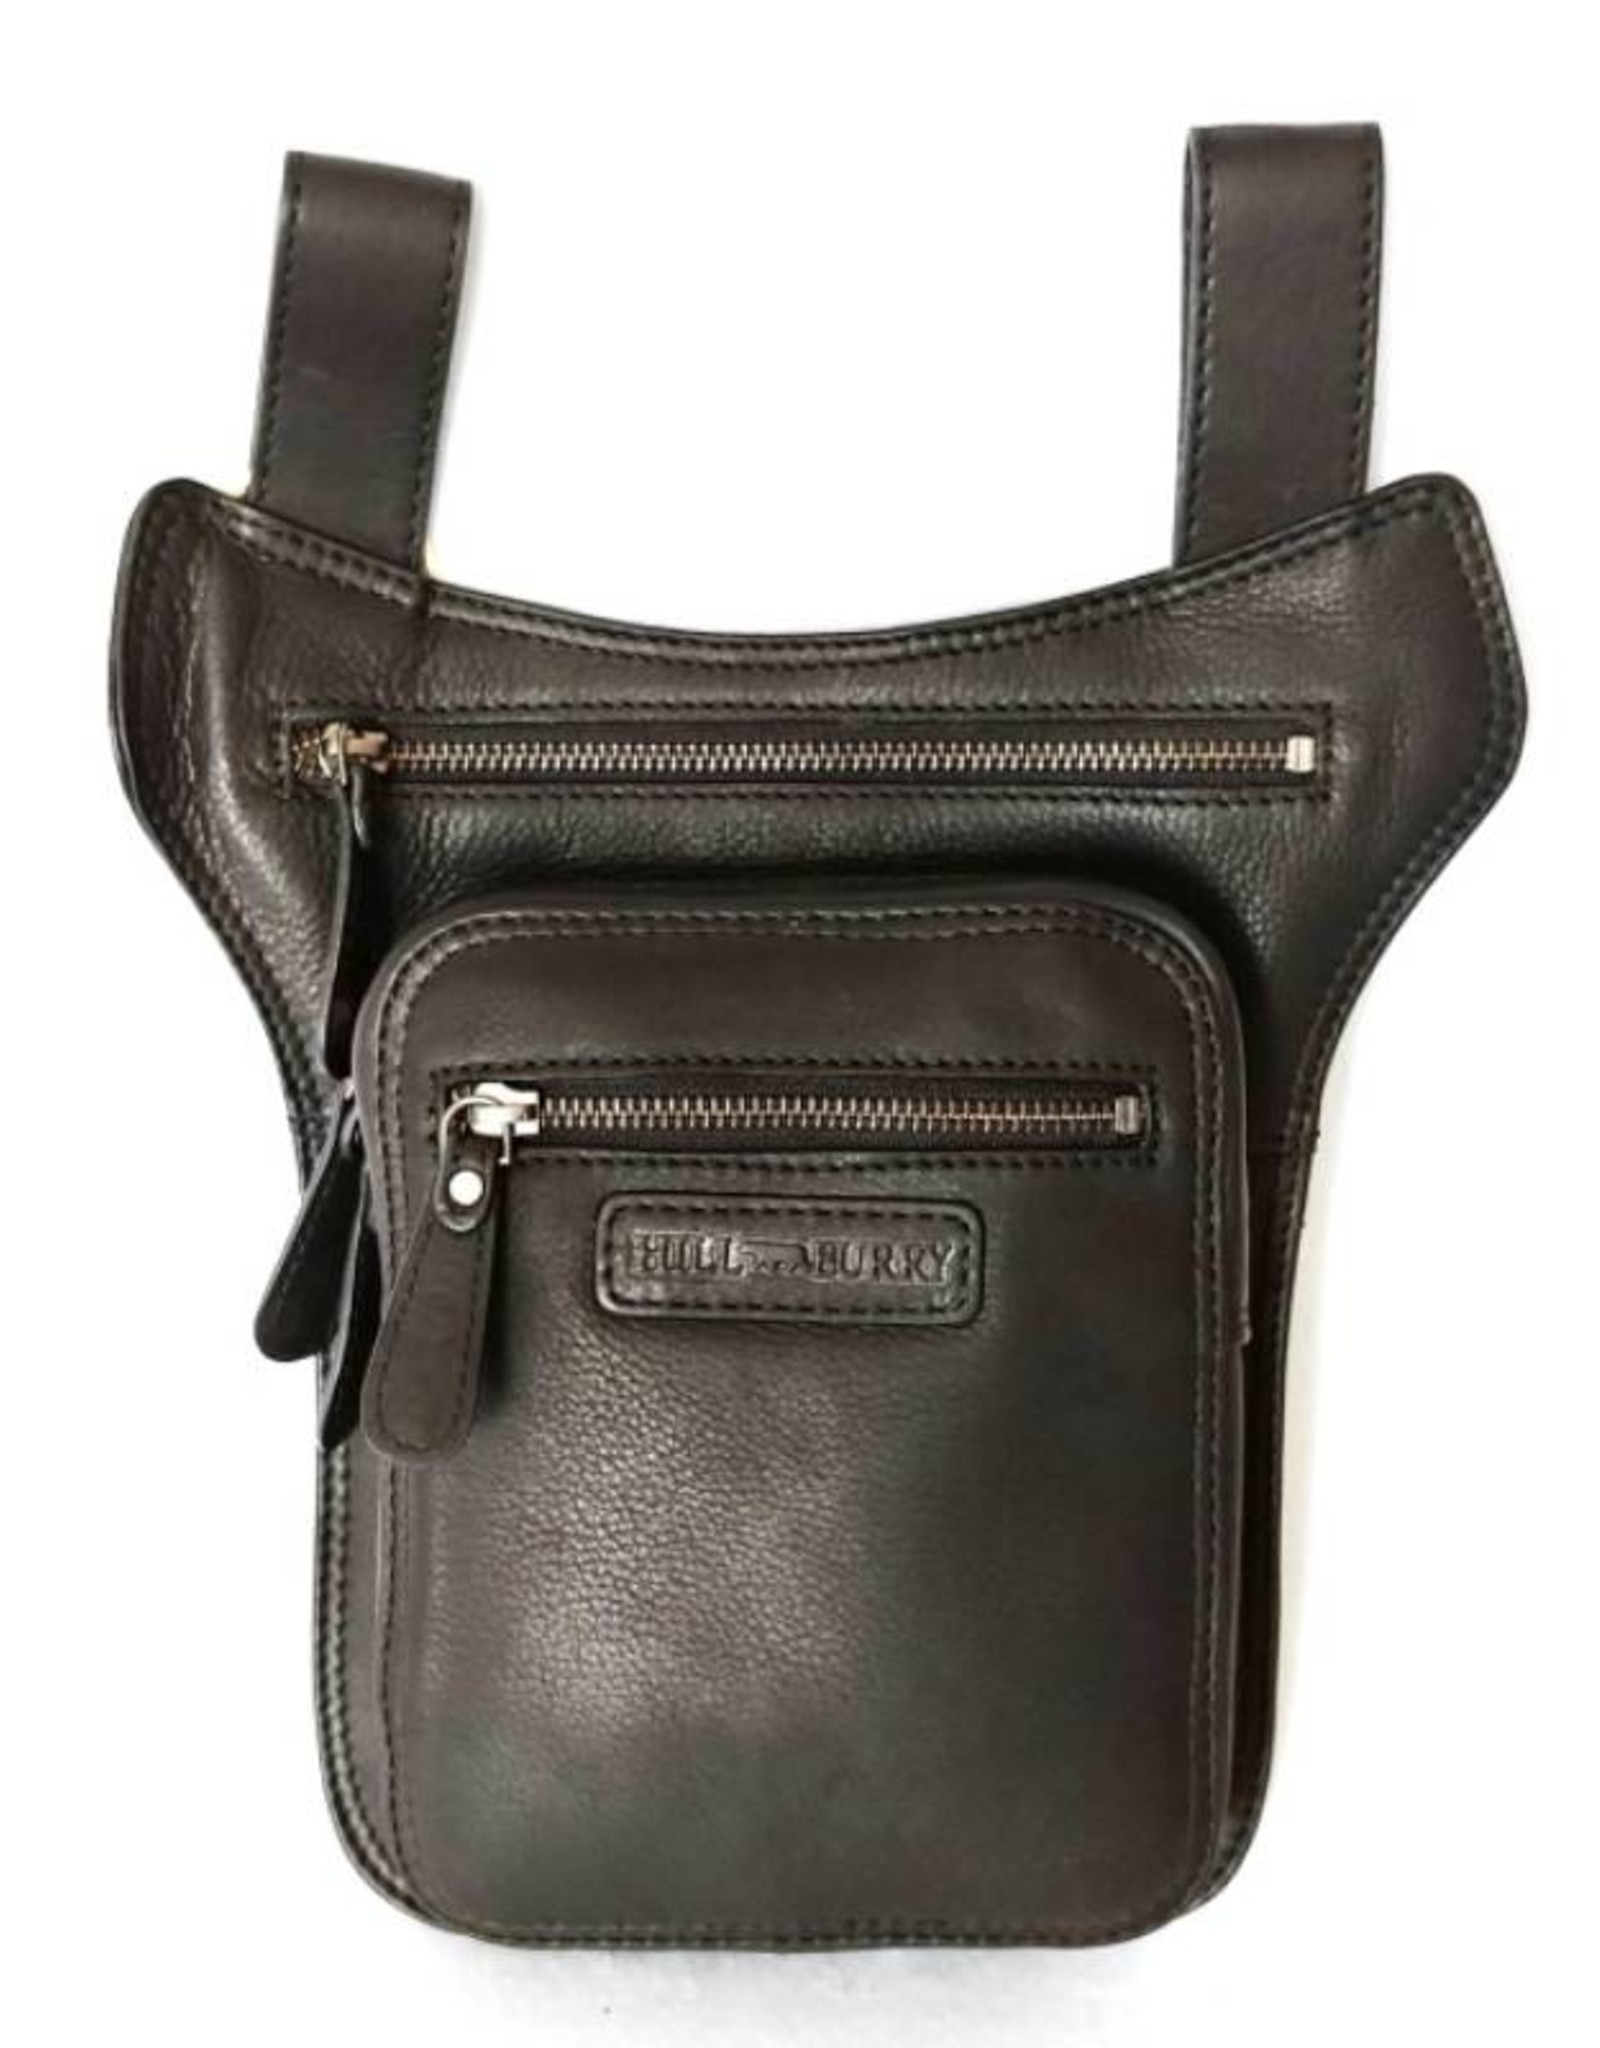 HillBurry Leather bags - Hillburry leather belt bag black 6186